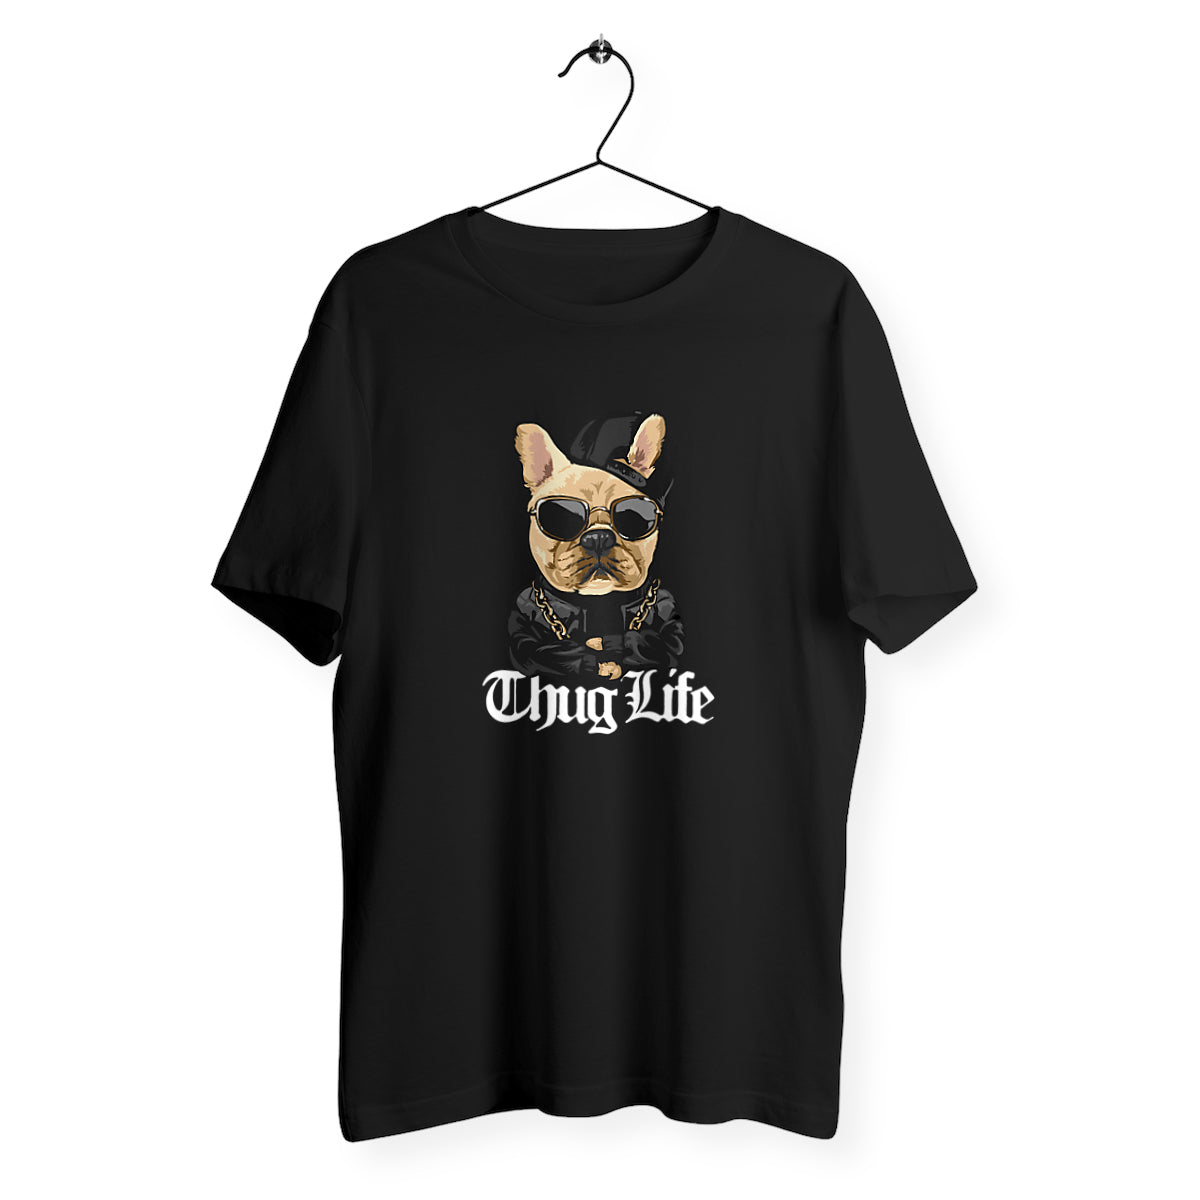 T-shirt homme Thug life